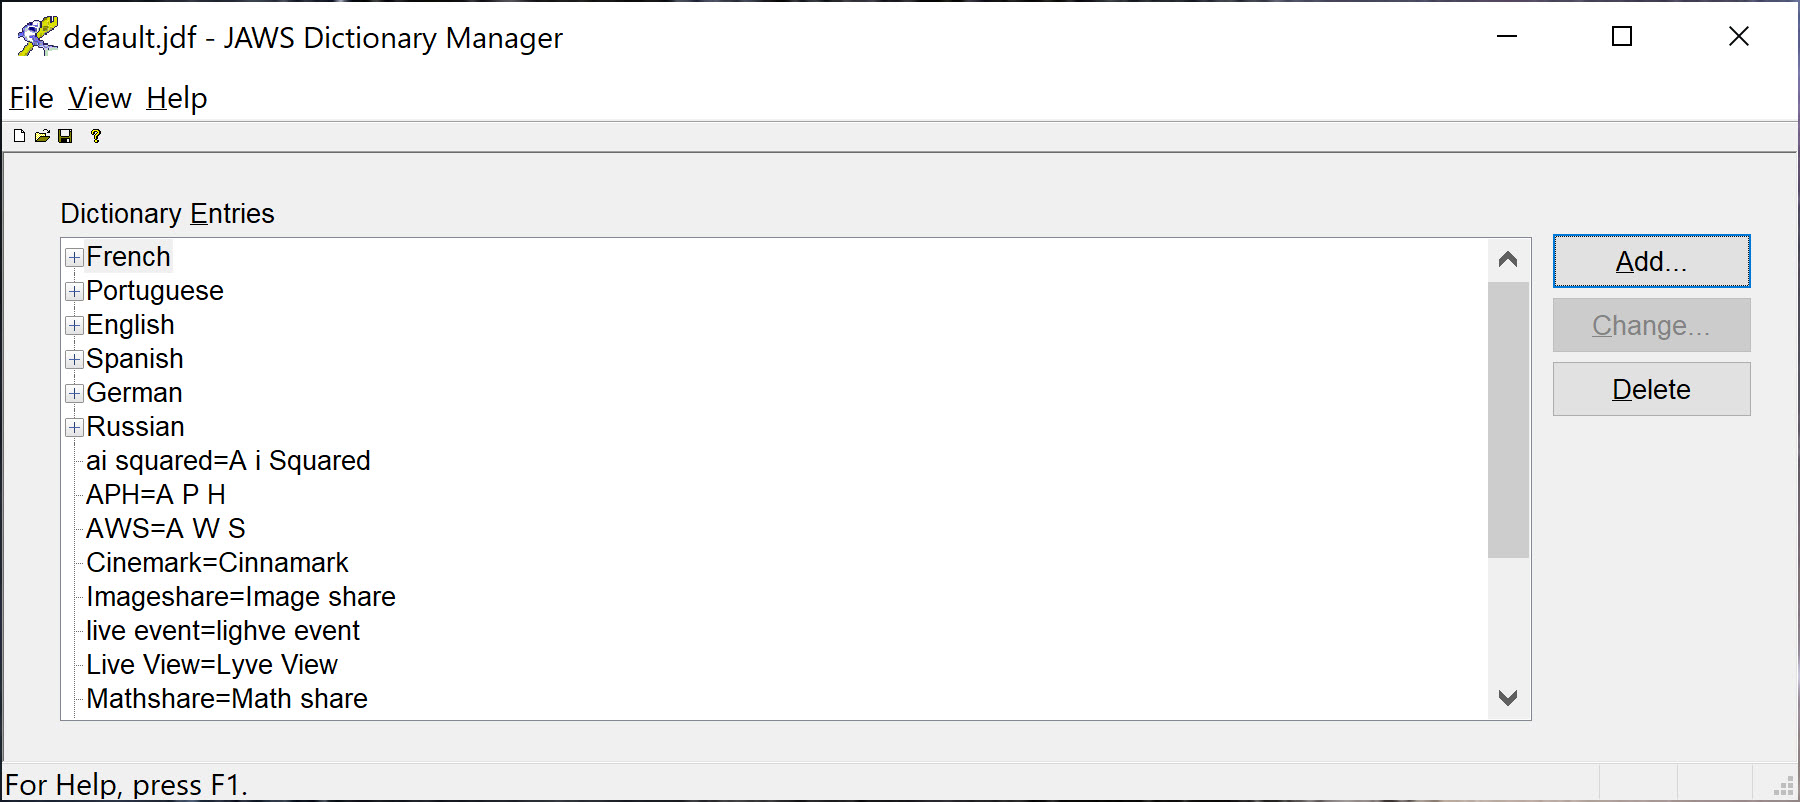 The default Dictionary Manager dialog box